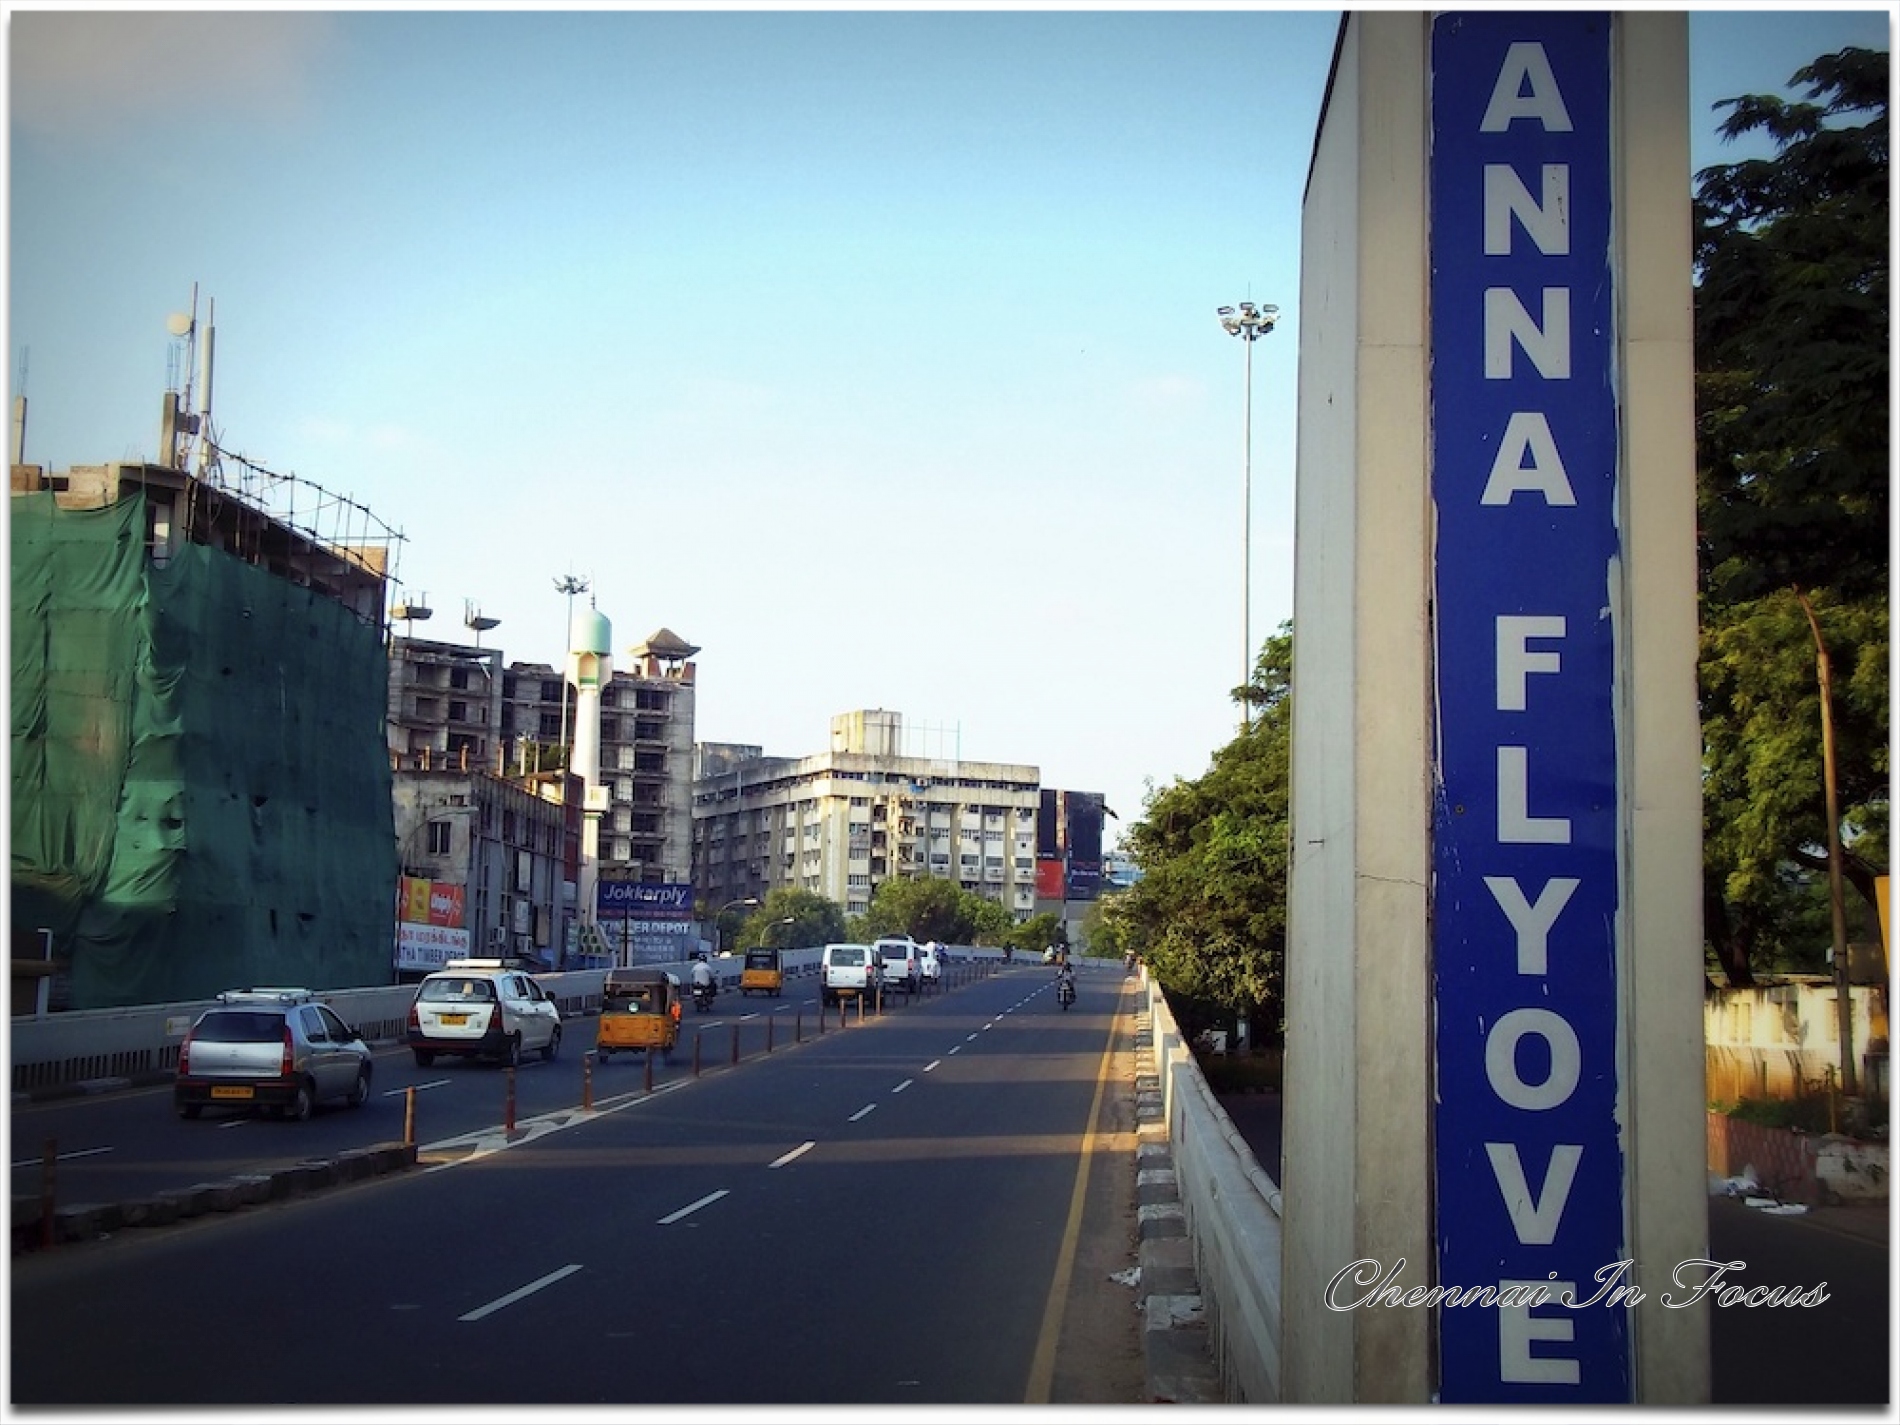 Anna Flyover - Chennai In Focus